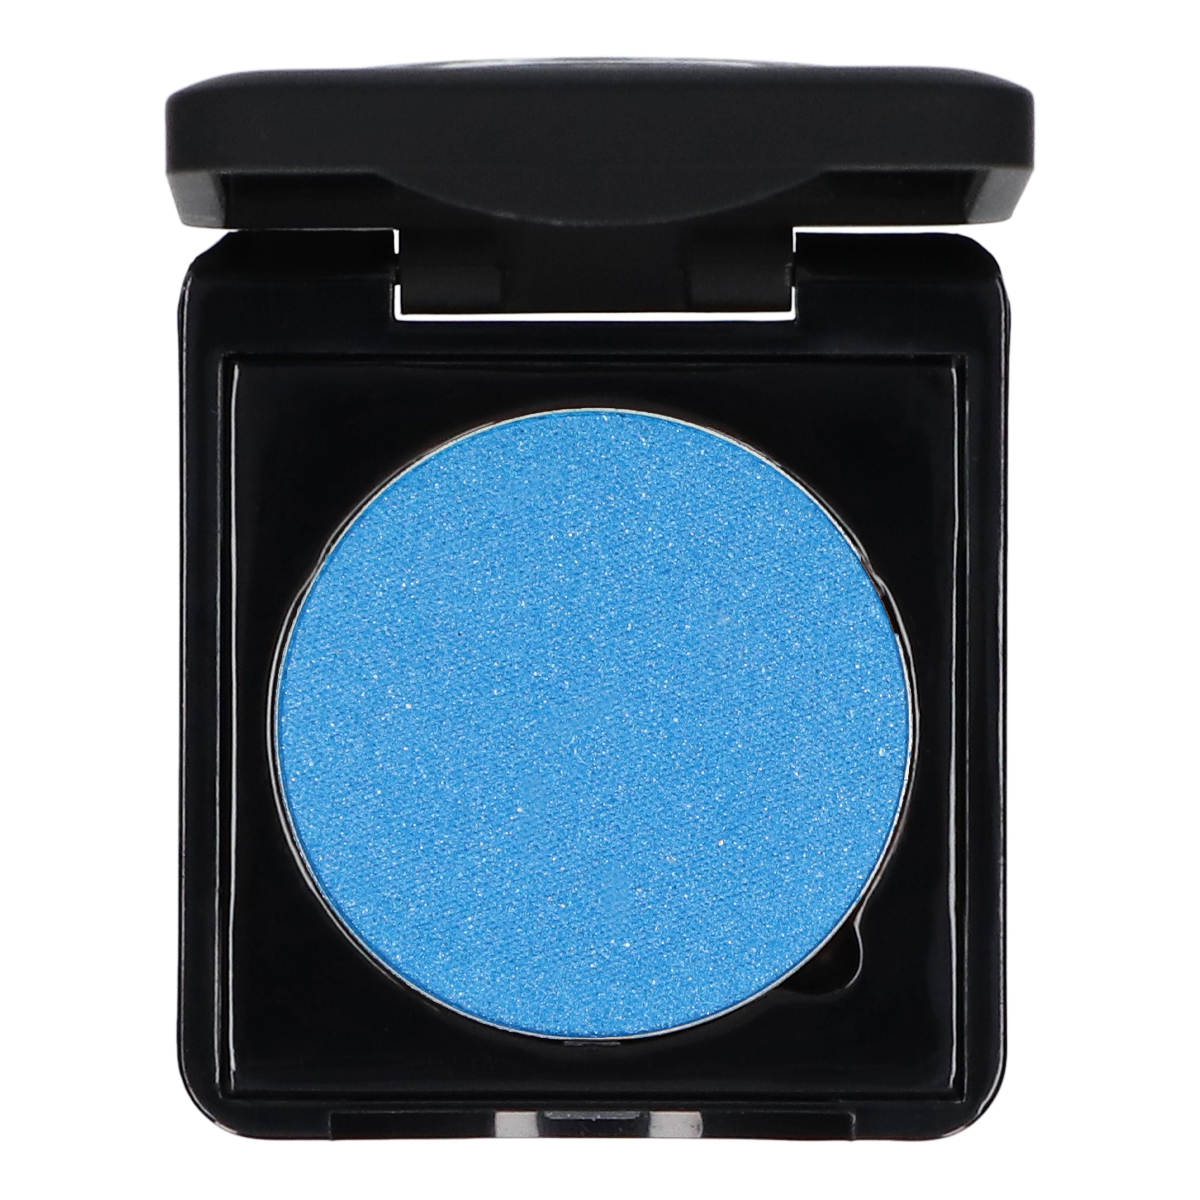 Make-up Studio Eyeshadow Super Frost - Jolly Blue